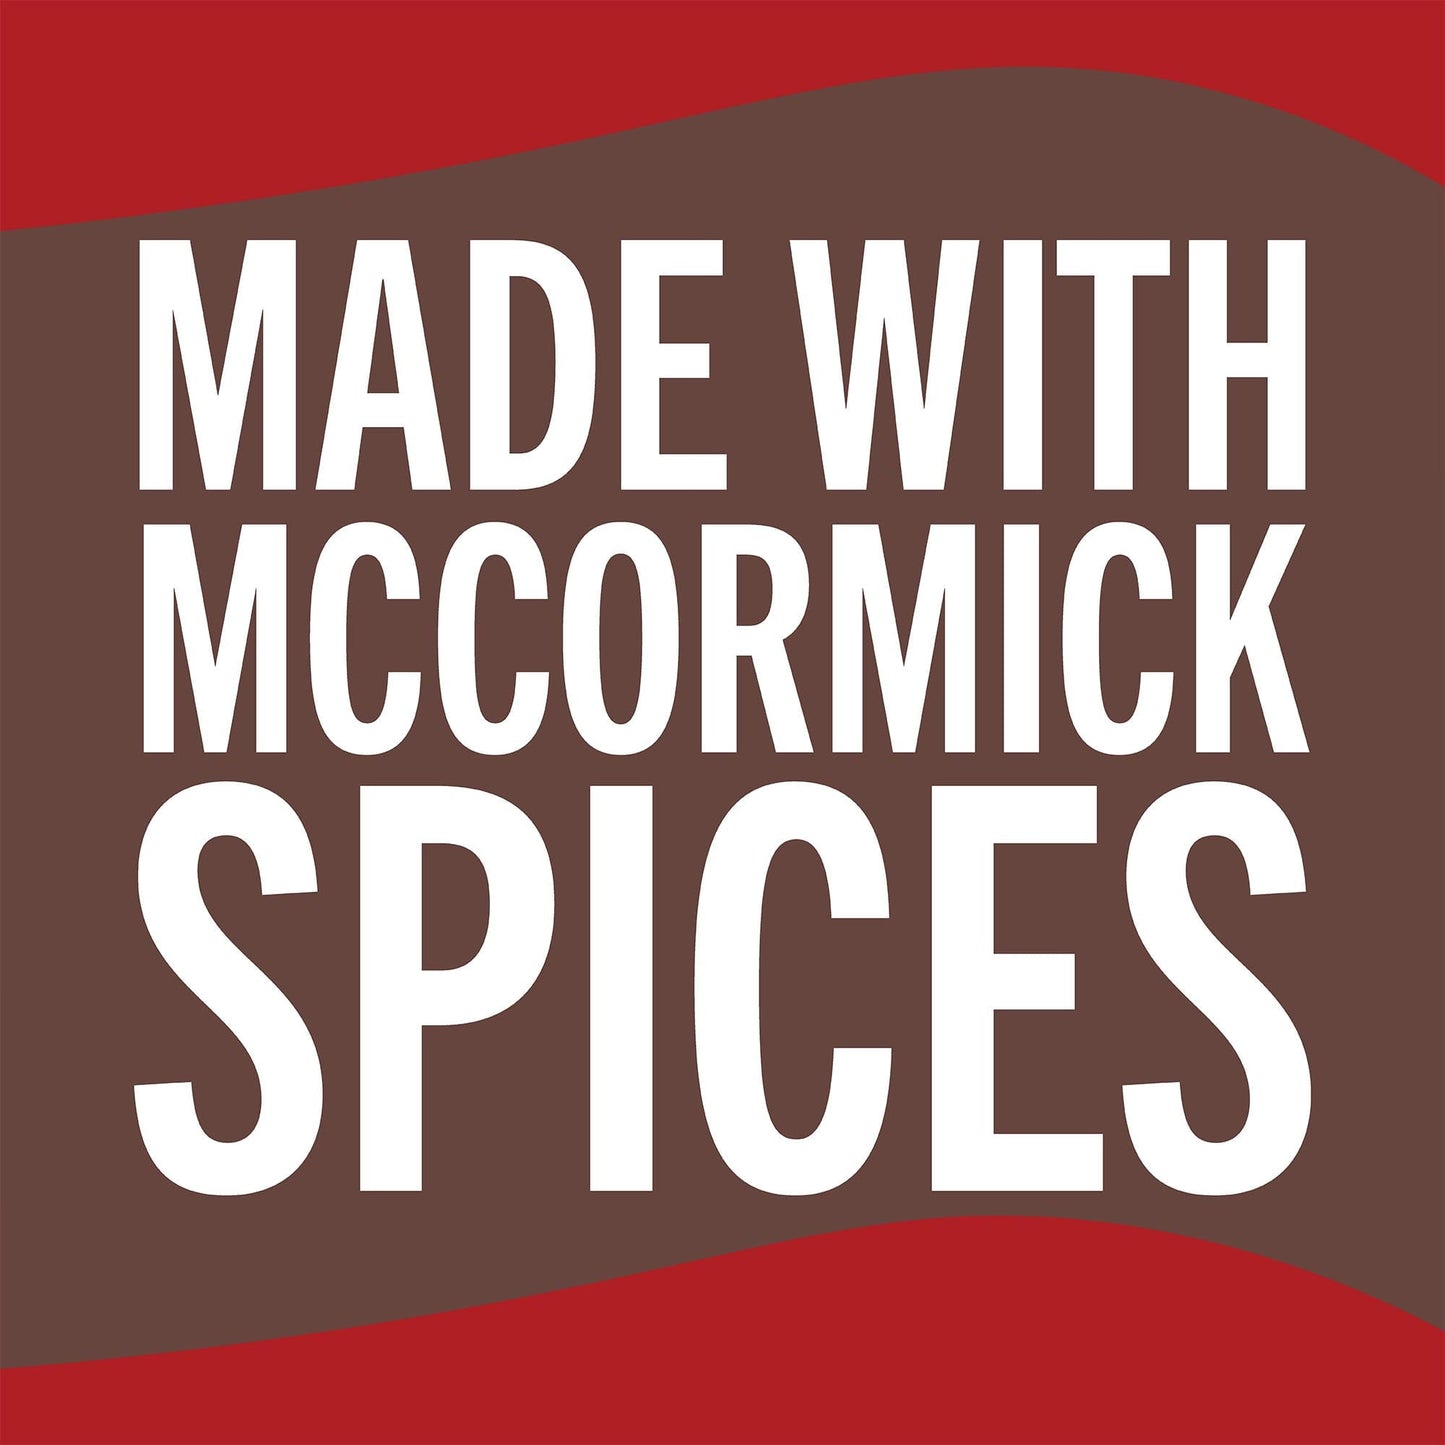 McCormick Chili Seasoning Mix, 1.25 oz Mixed Spices & Seasonings